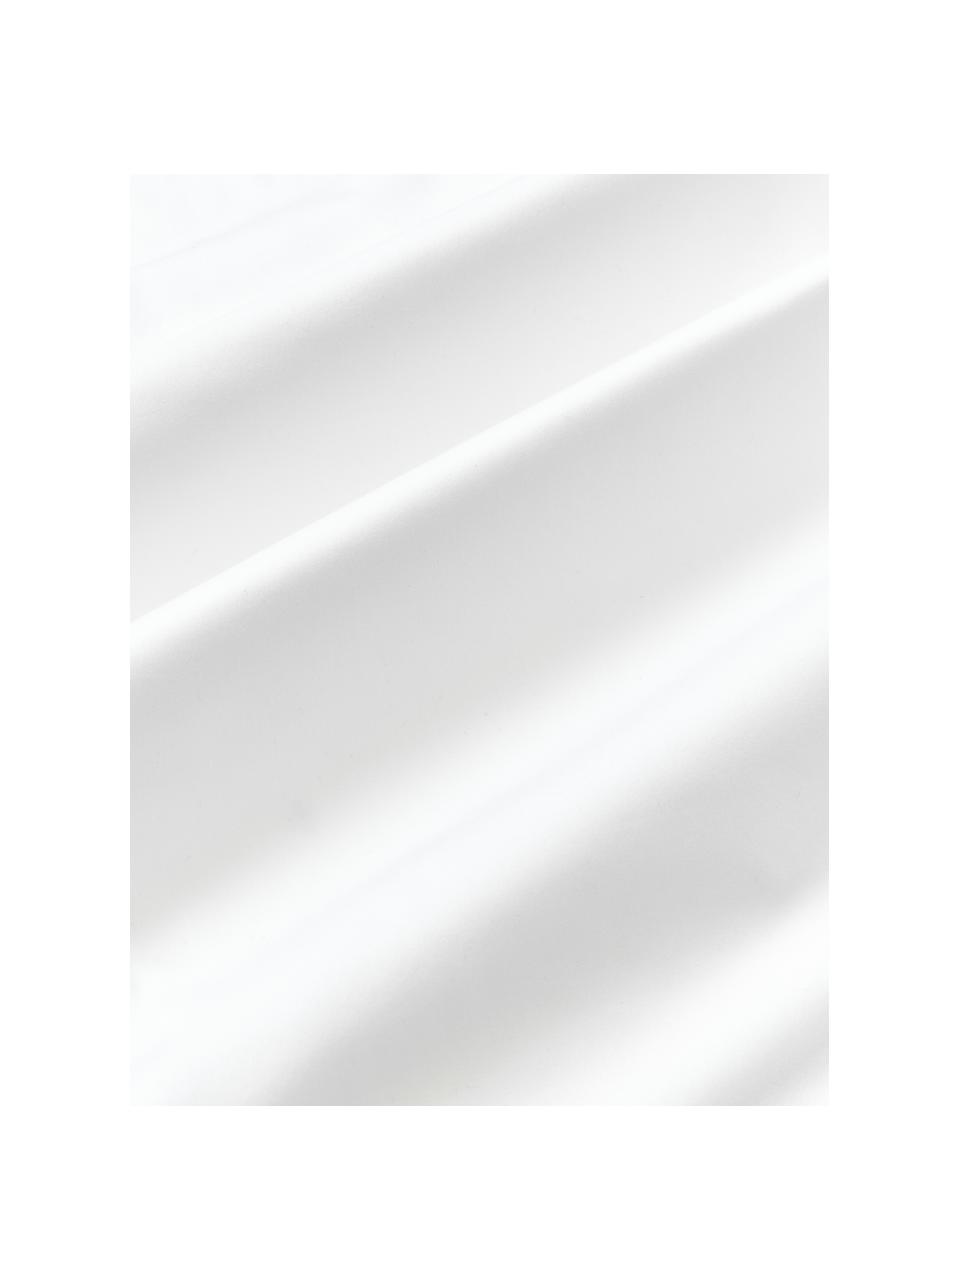 Katoenen satijnen laken Carlotta, Weeftechniek: satijn Draaddichtheid 300, Wit, lichtbeige, B 240 x L 280 cm